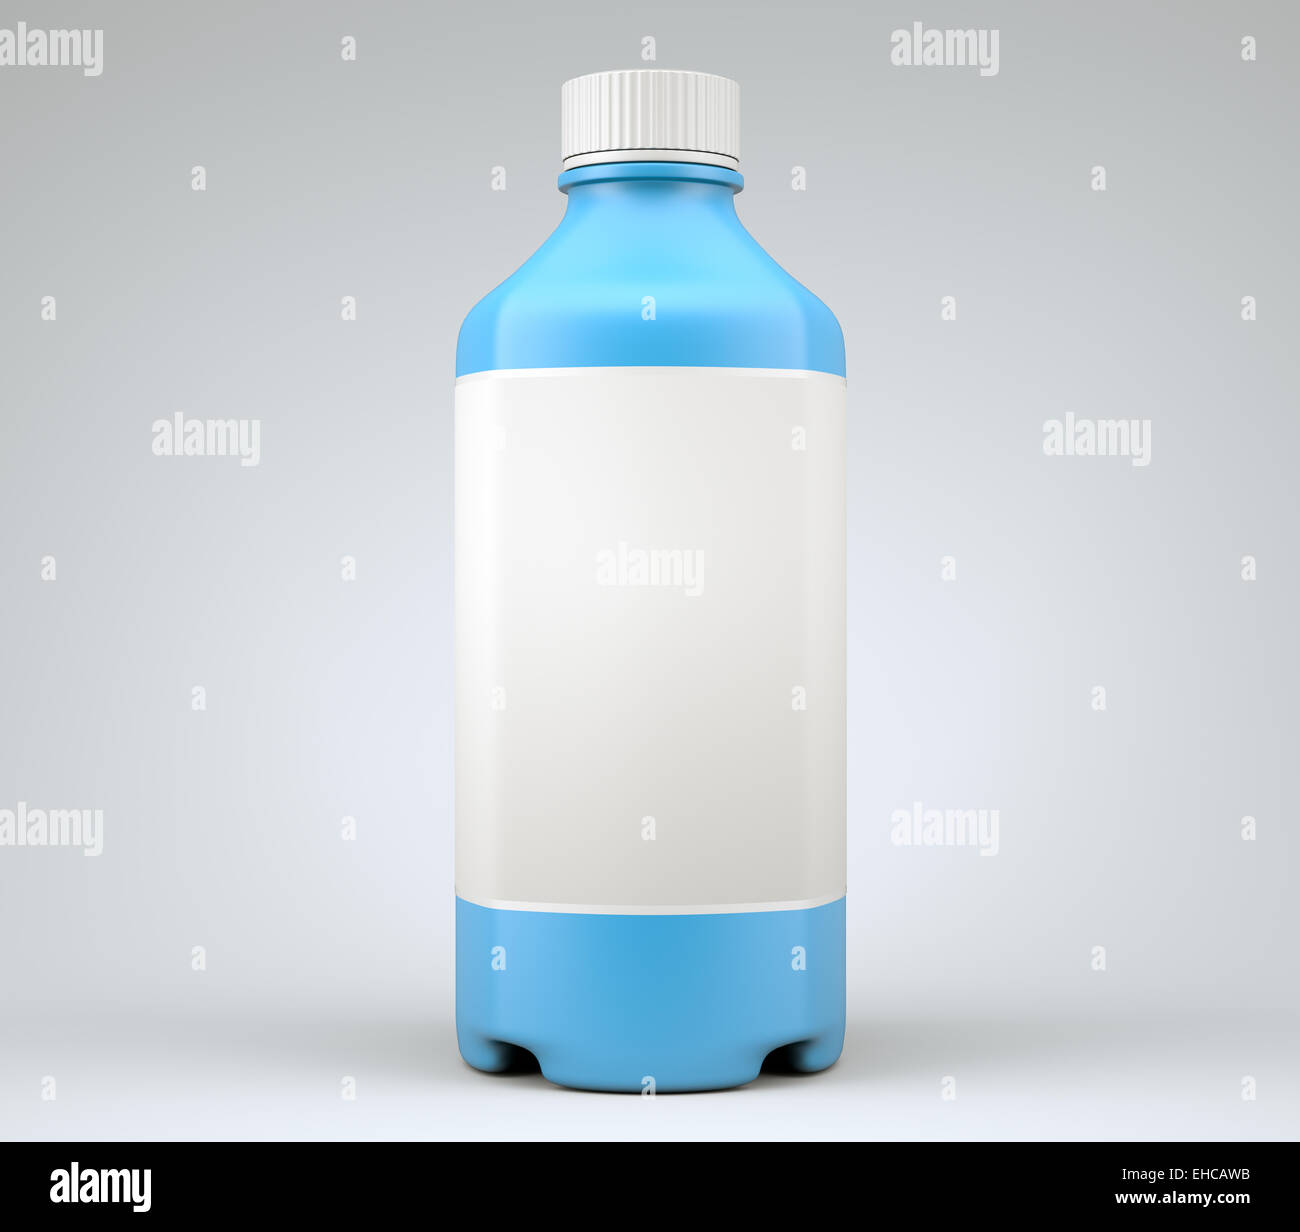 Botella Azul para productos químicos o medicamentos o líquidos. Alta resolución Foto de stock